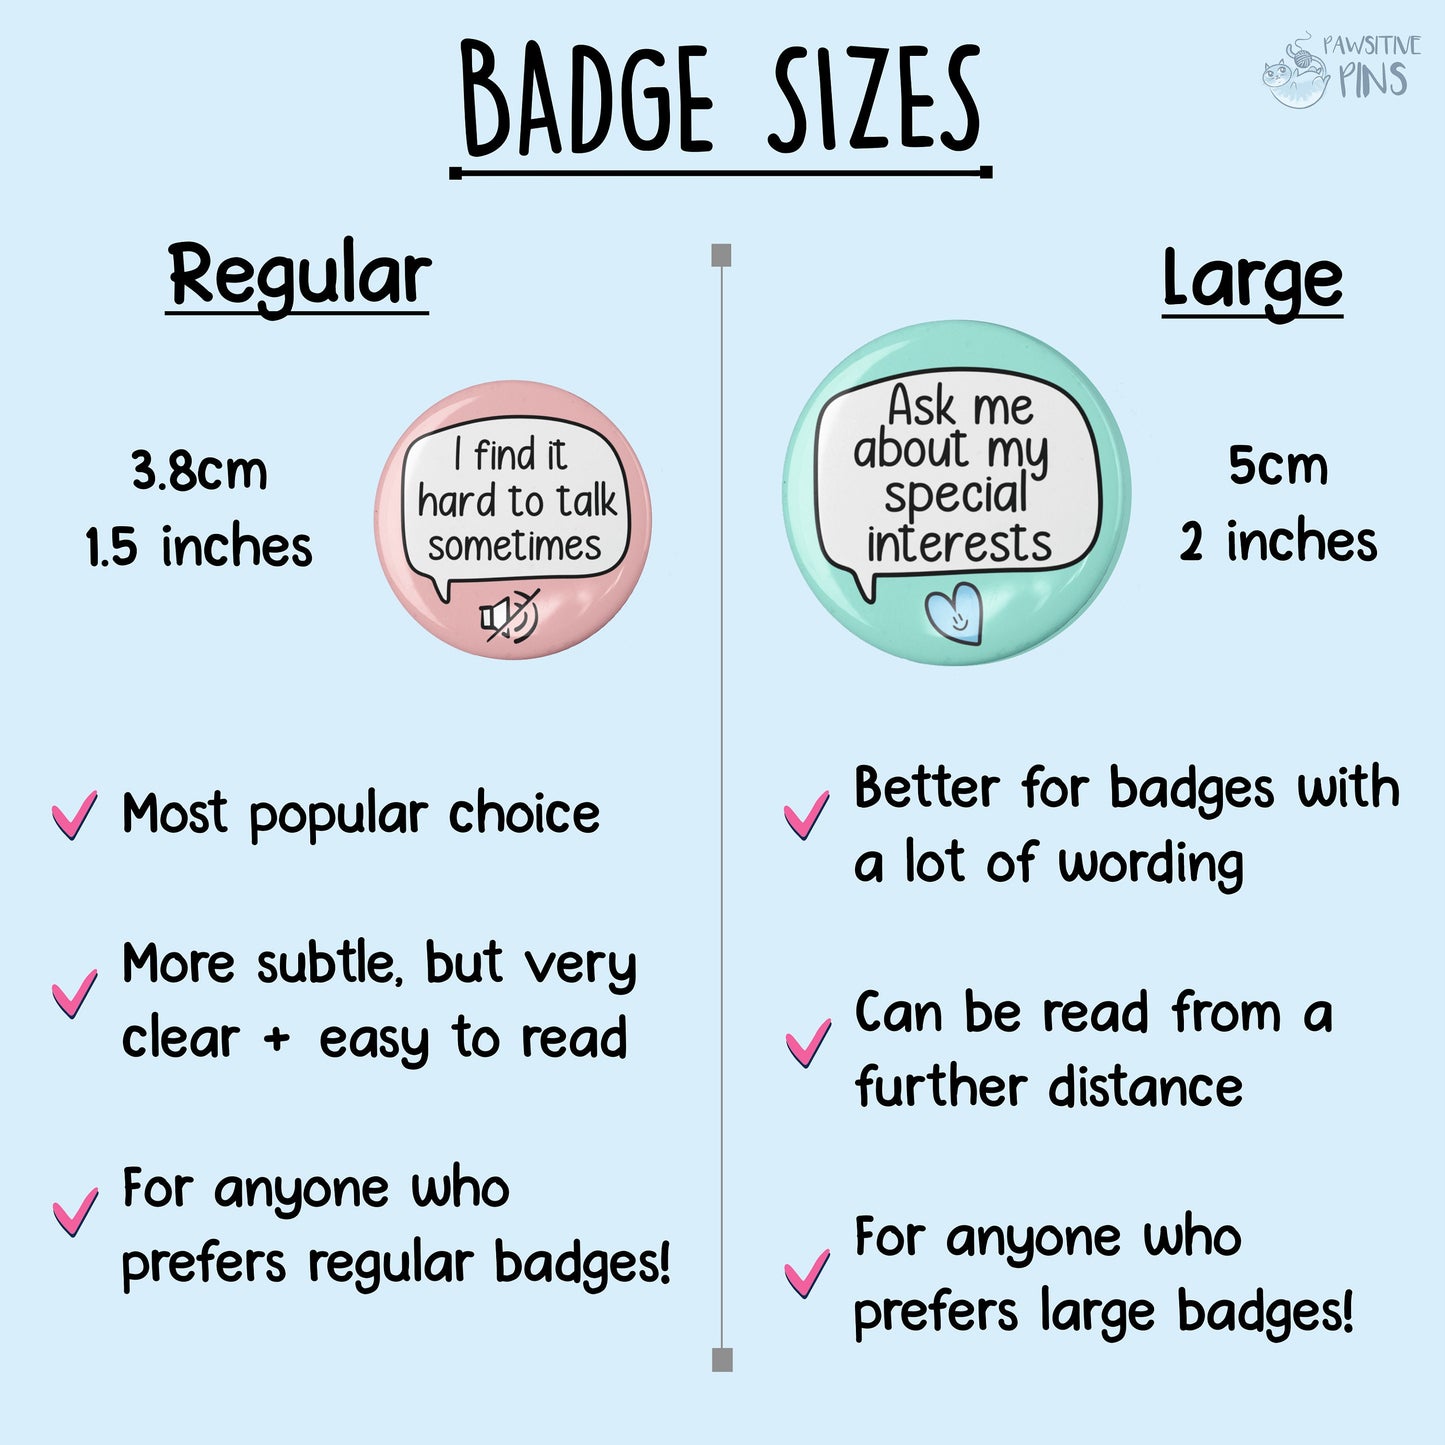 Can We Change Topics? - Pin Badge